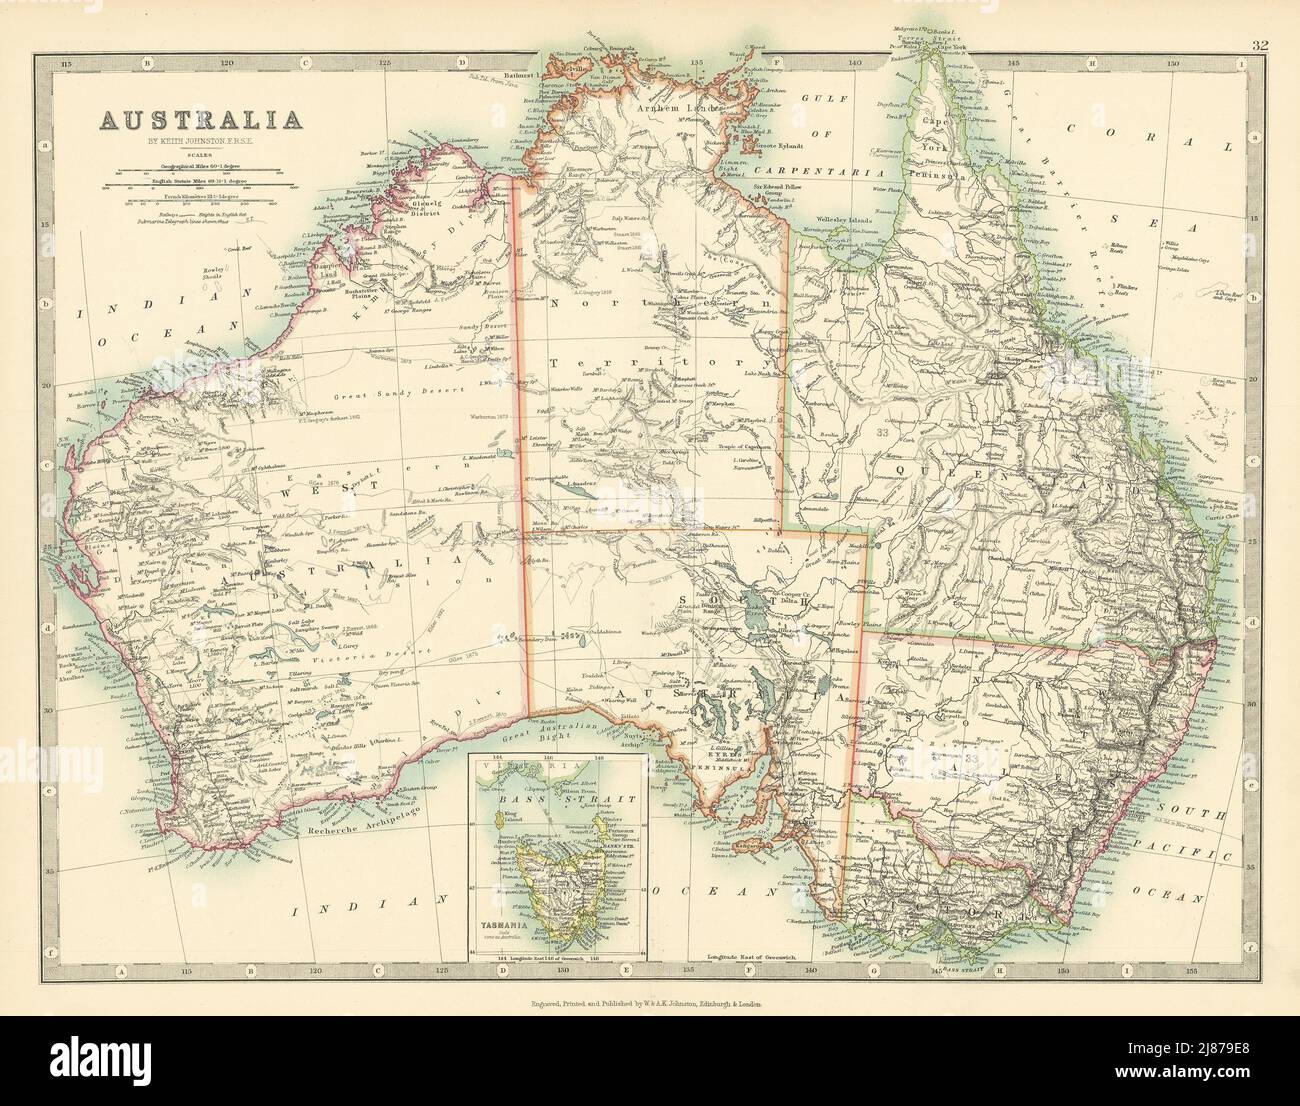 AUSTRALIA Showing explorers' routes with dates Railways JOHNSTON 1897 old map Stock Photo